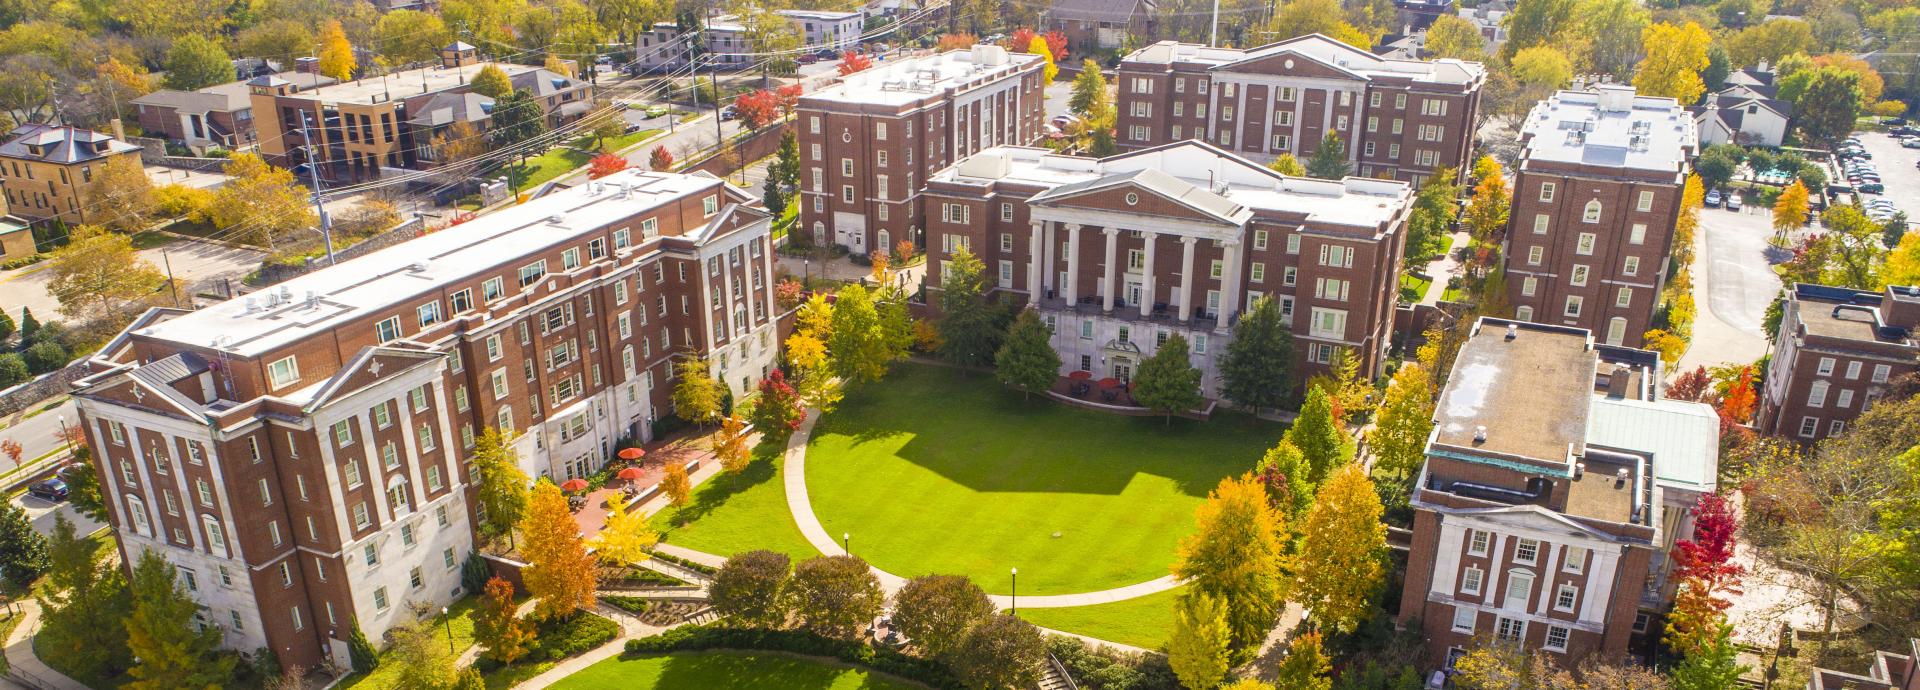 University buildings from Vanderbilt University campus in Nashville